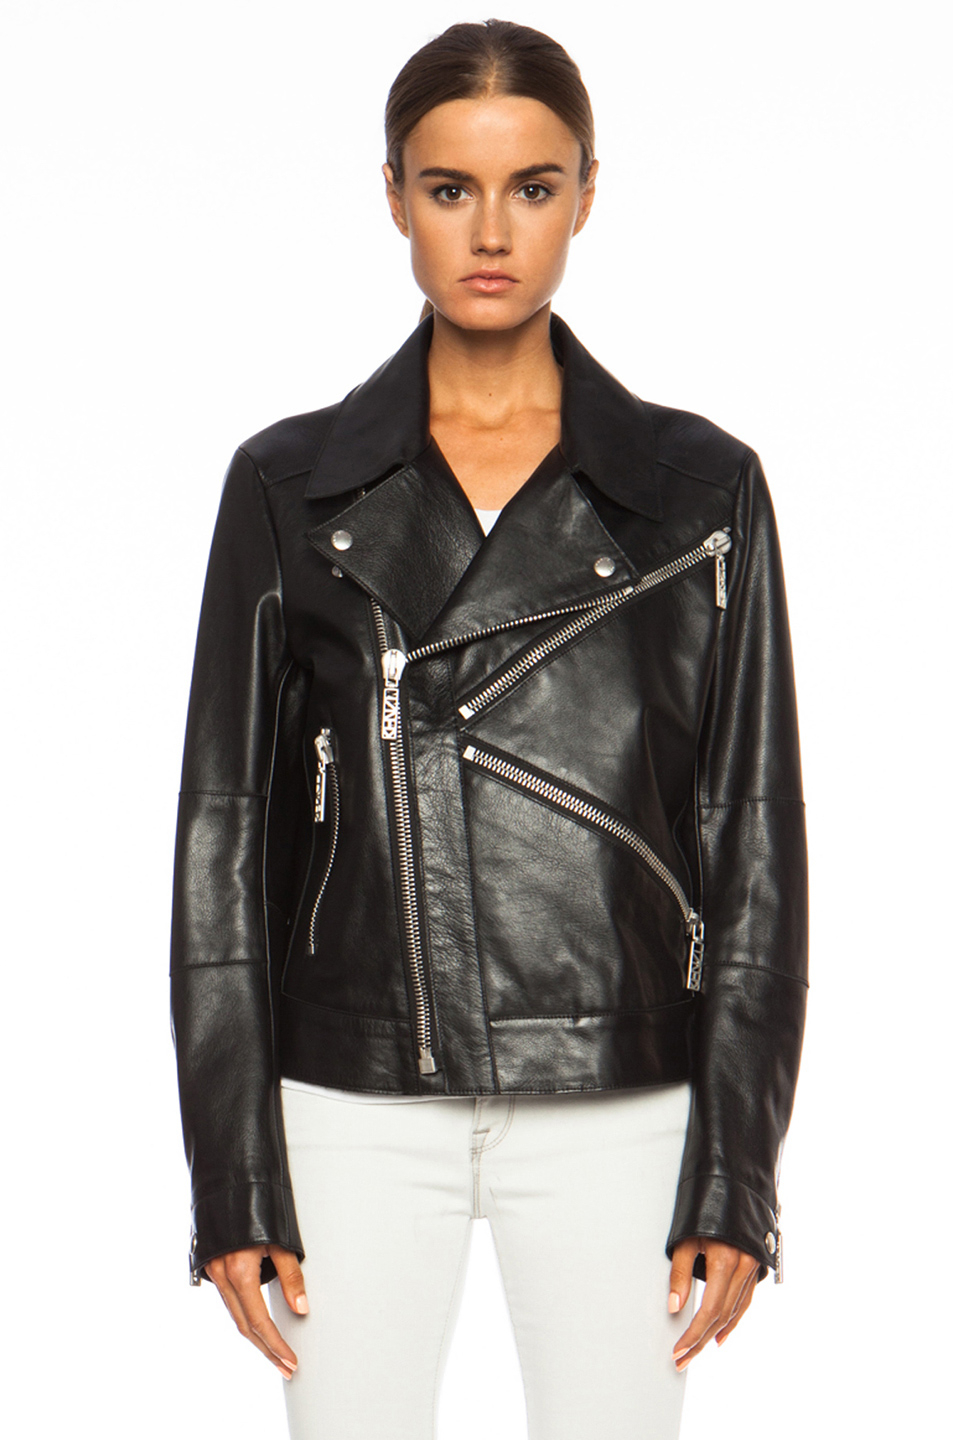 Lyst - Kenzo Bull Leather Jacket with K Zipper in Black